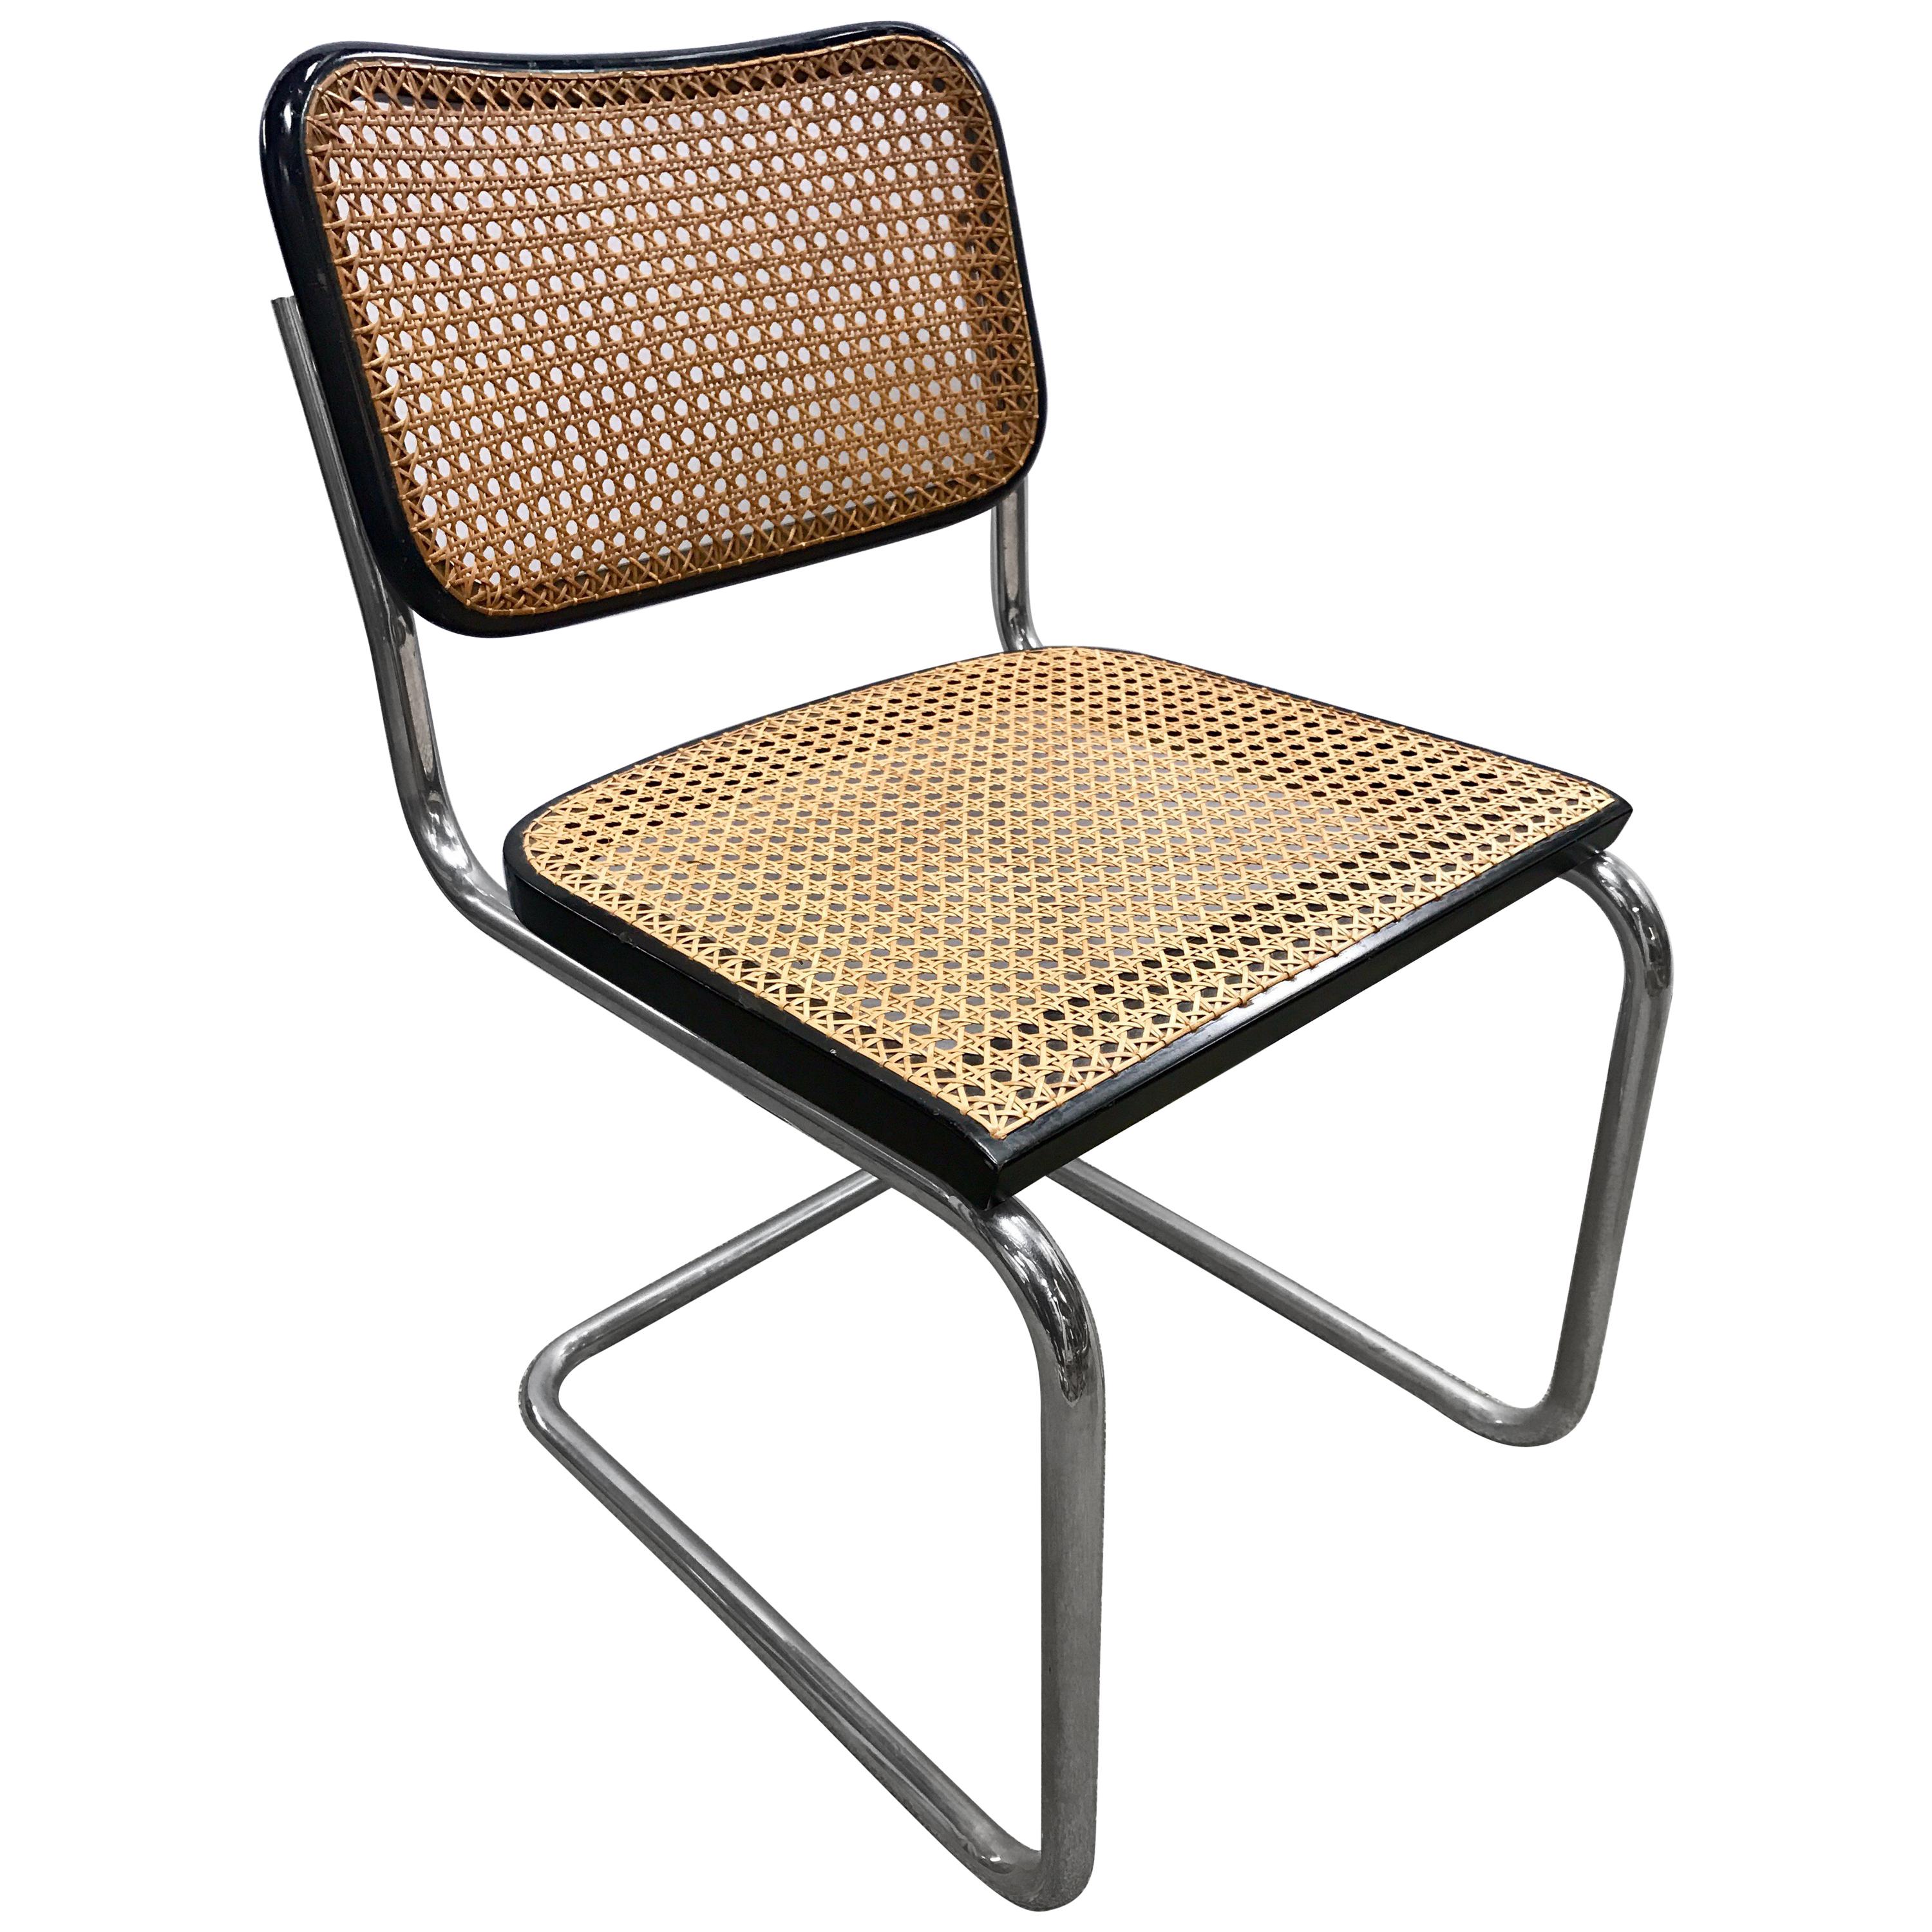 Signed Knoll Tubular Dining Room Chair Mid-Century Modern Classic